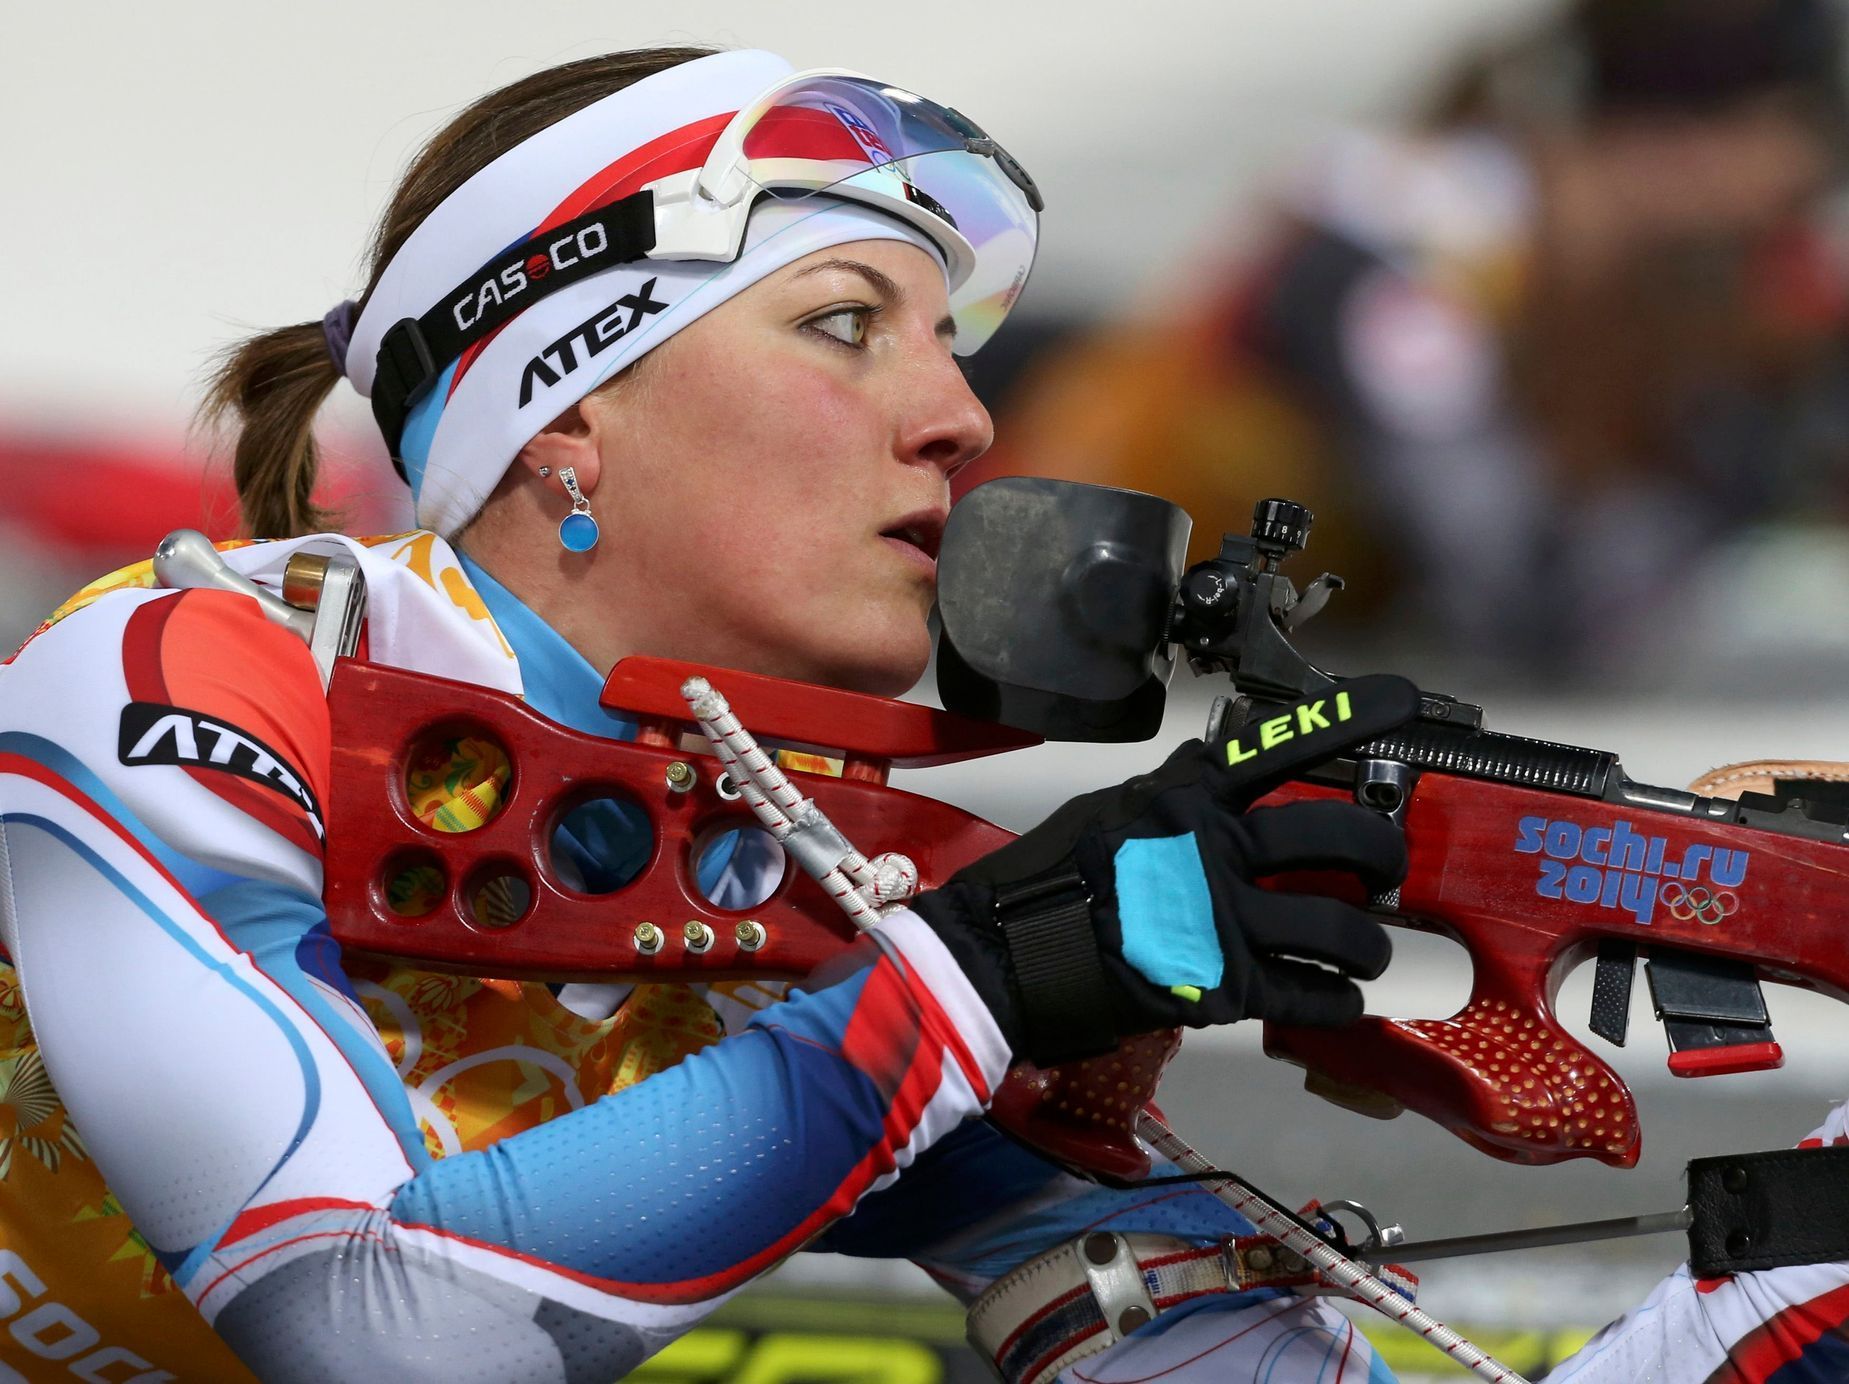 Czech Republic's Landova prepares to shoot during women's biathlon 4x6 km relay at Sochi 2014 Winter Olympic Games